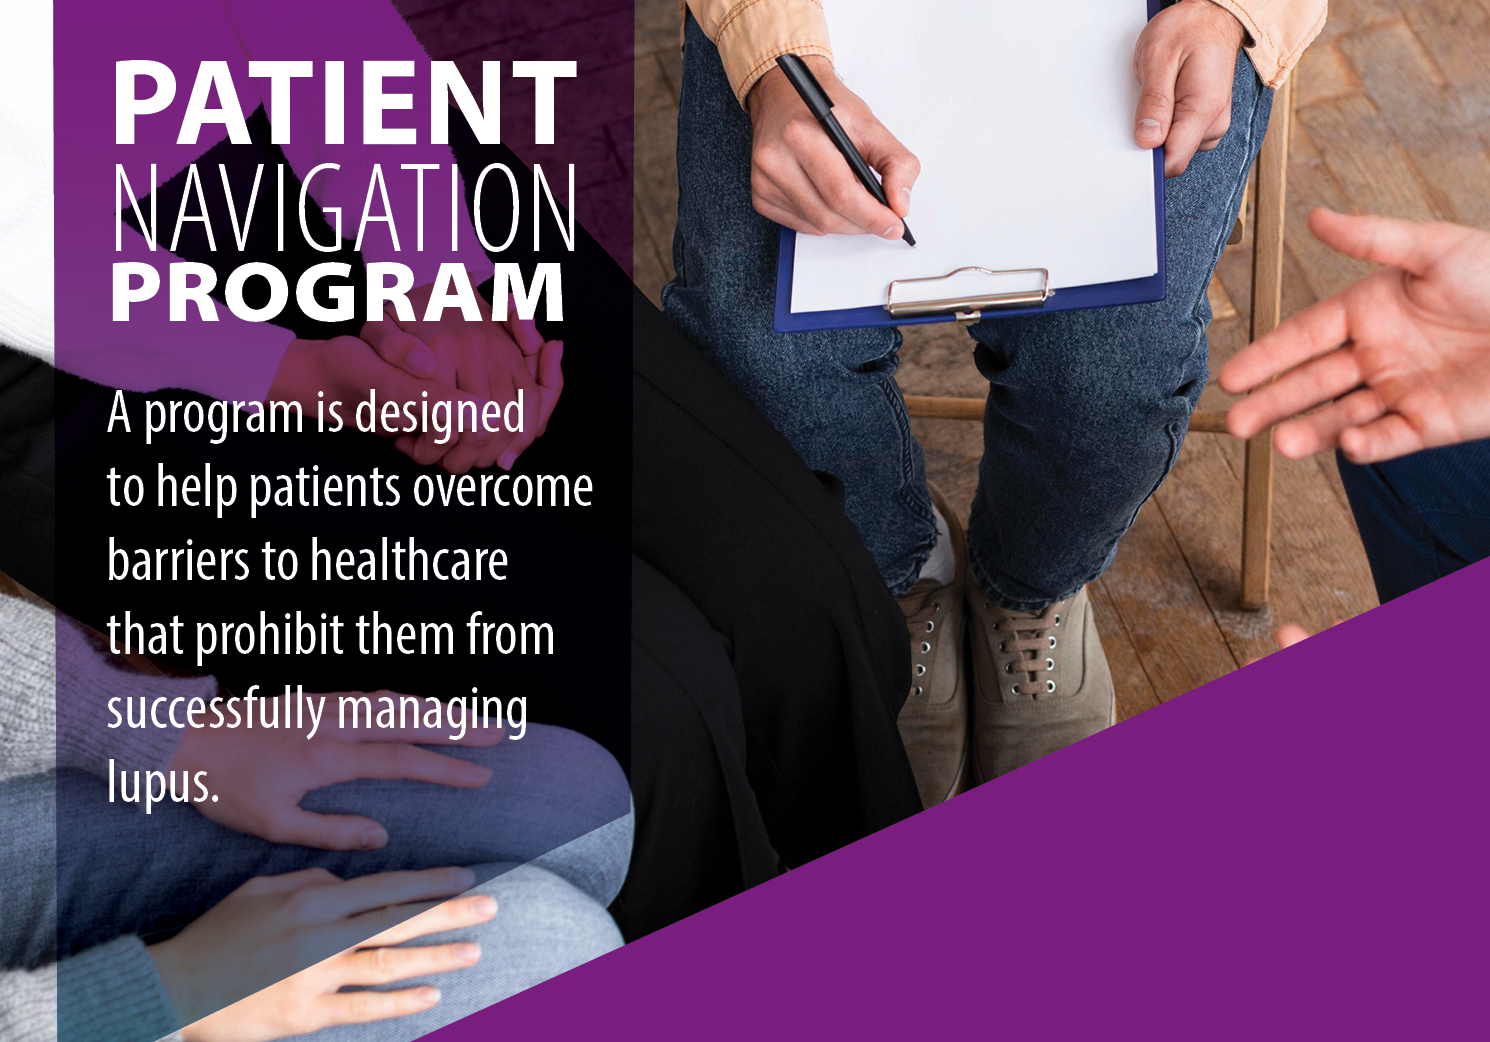 "Patient Navigation Program"